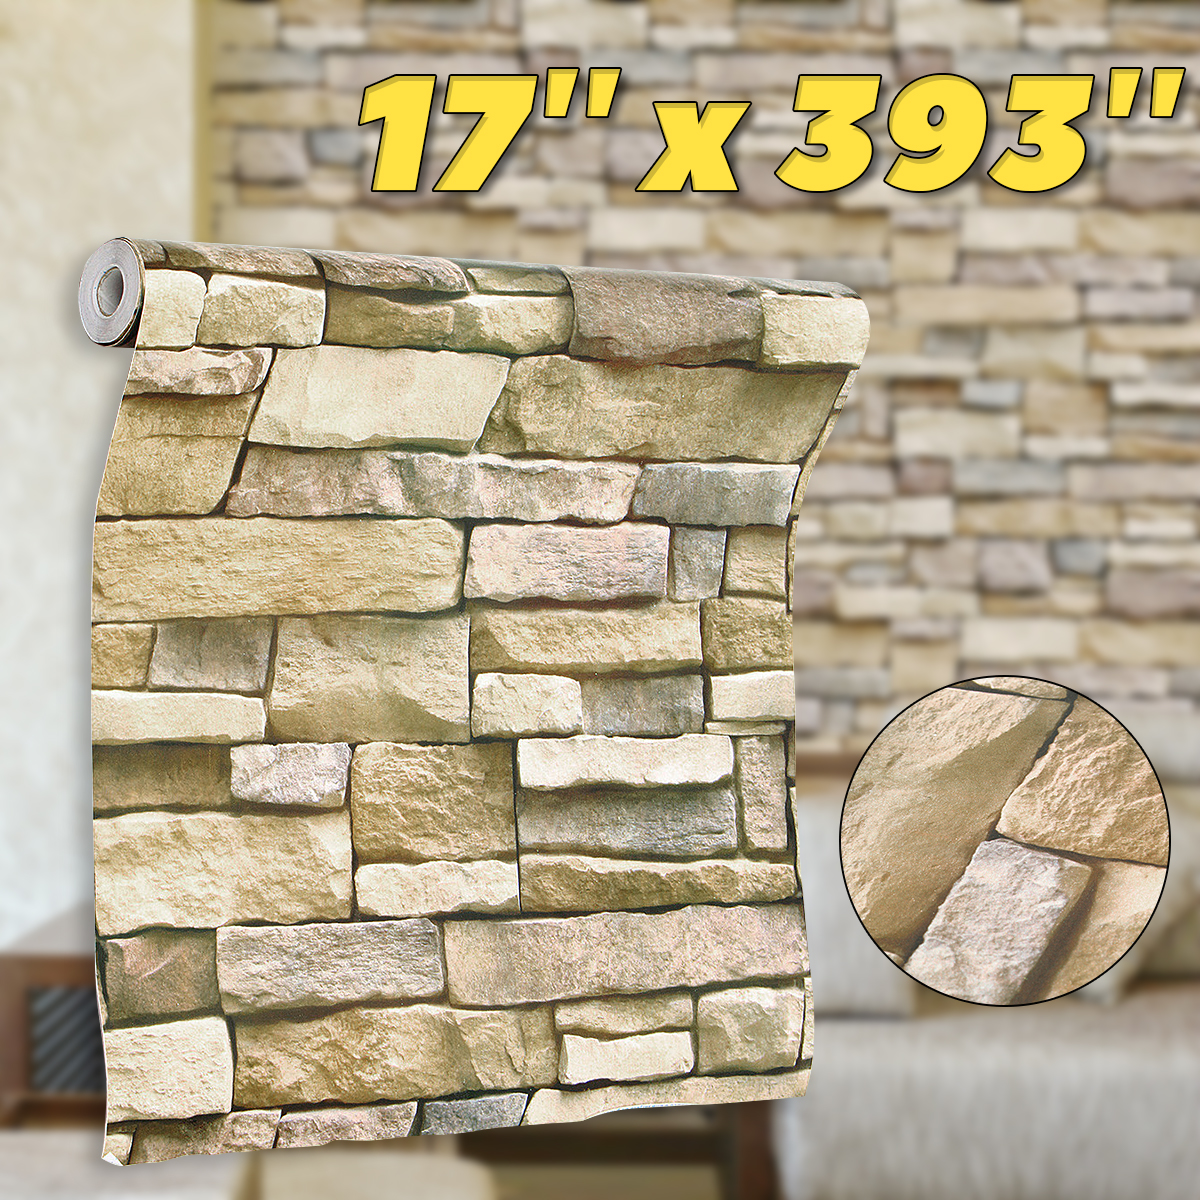 3D-Wall-Paper-Brick-Stone-Pattern-Sticker-Rolls-Self-adhesive-Backdrop-DIY-Room-Decor-1373594-1